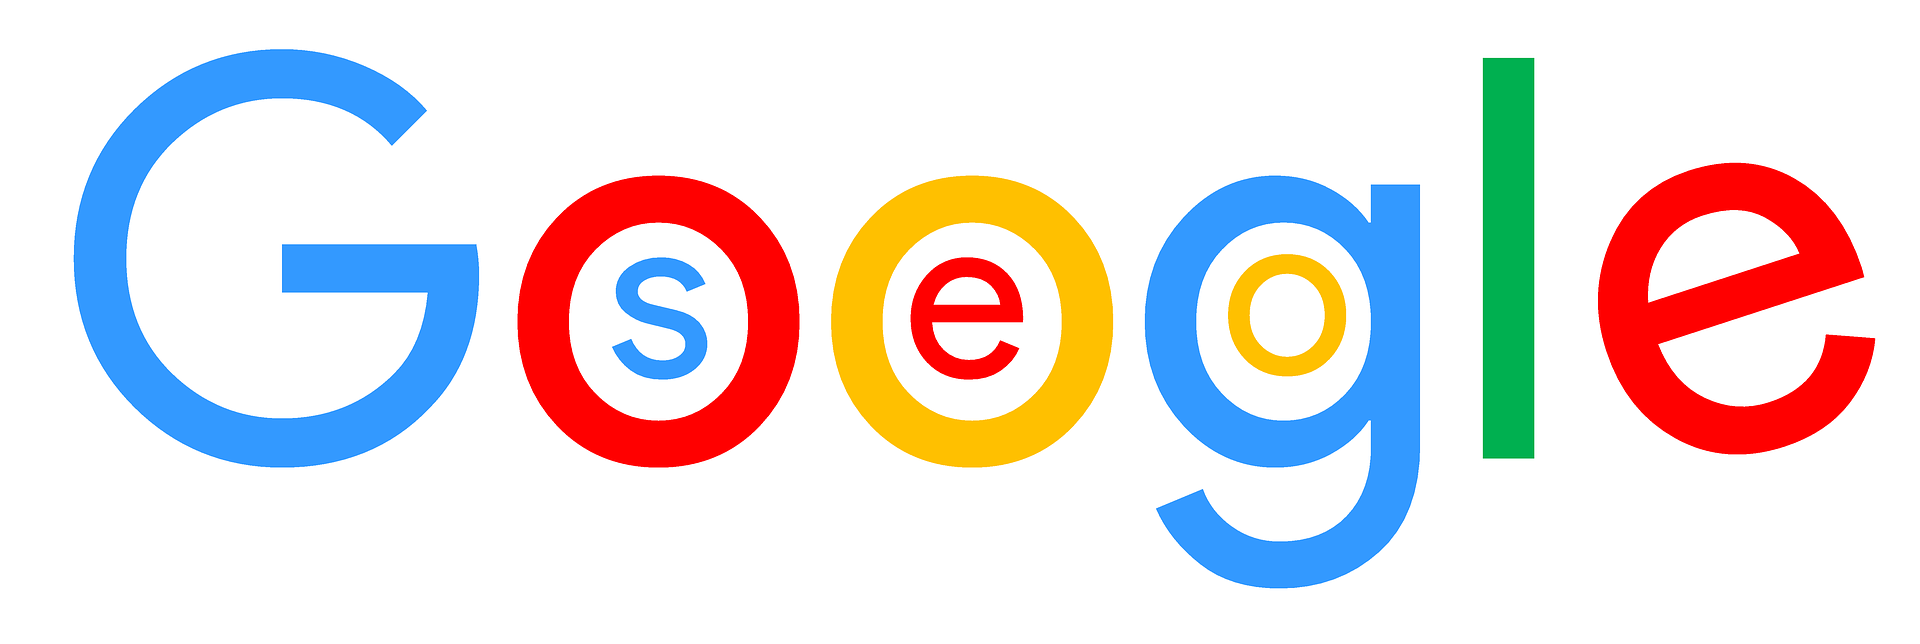 Google e SEO